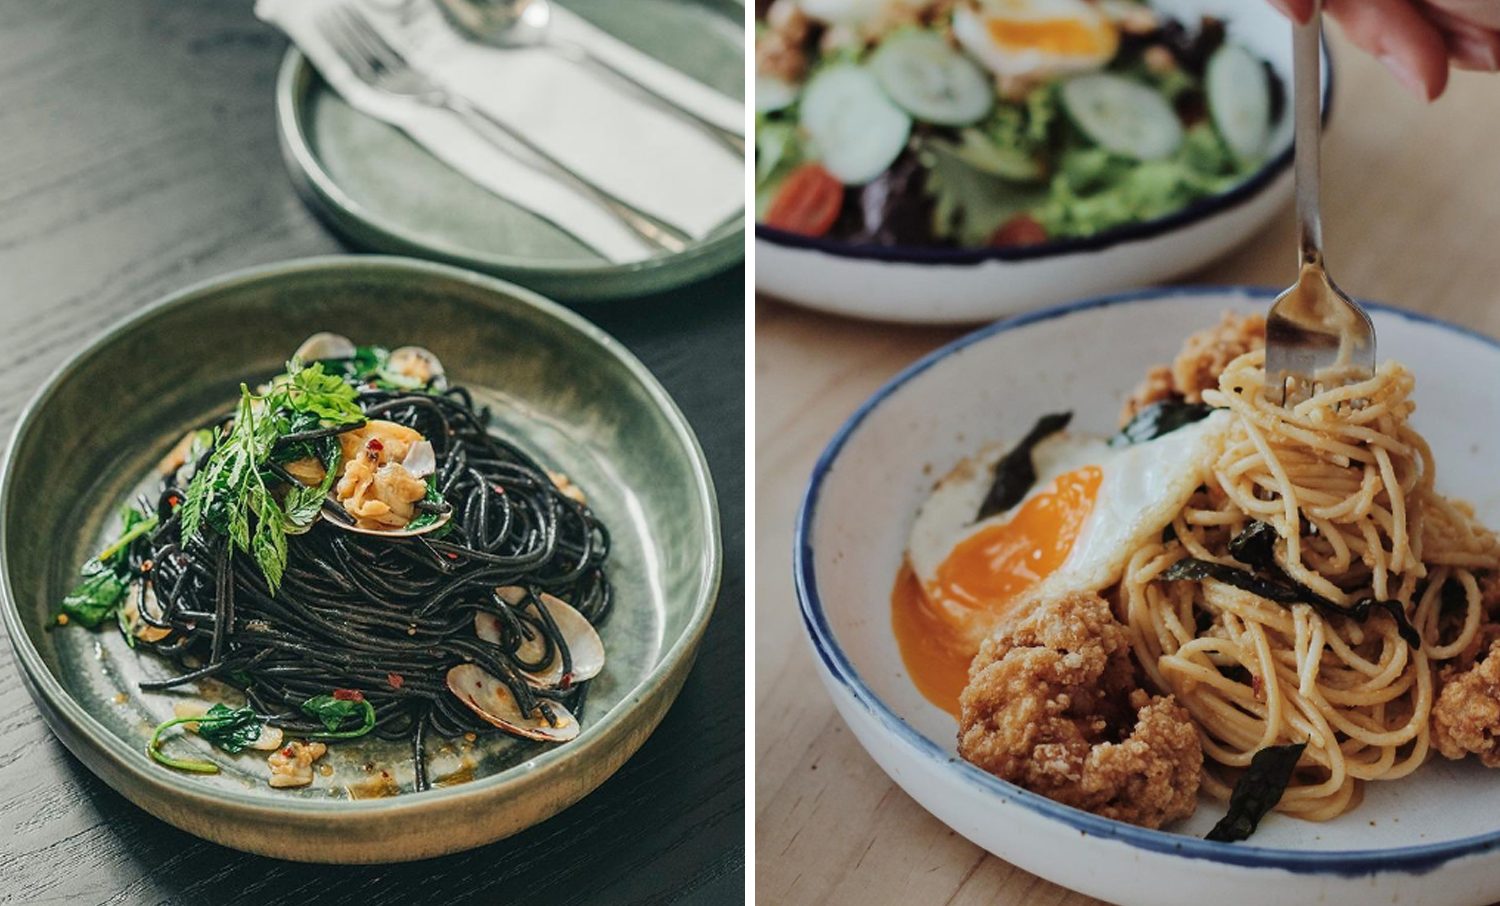 Pasta la vista! Here are 8 places that serve the best pasta in Klang